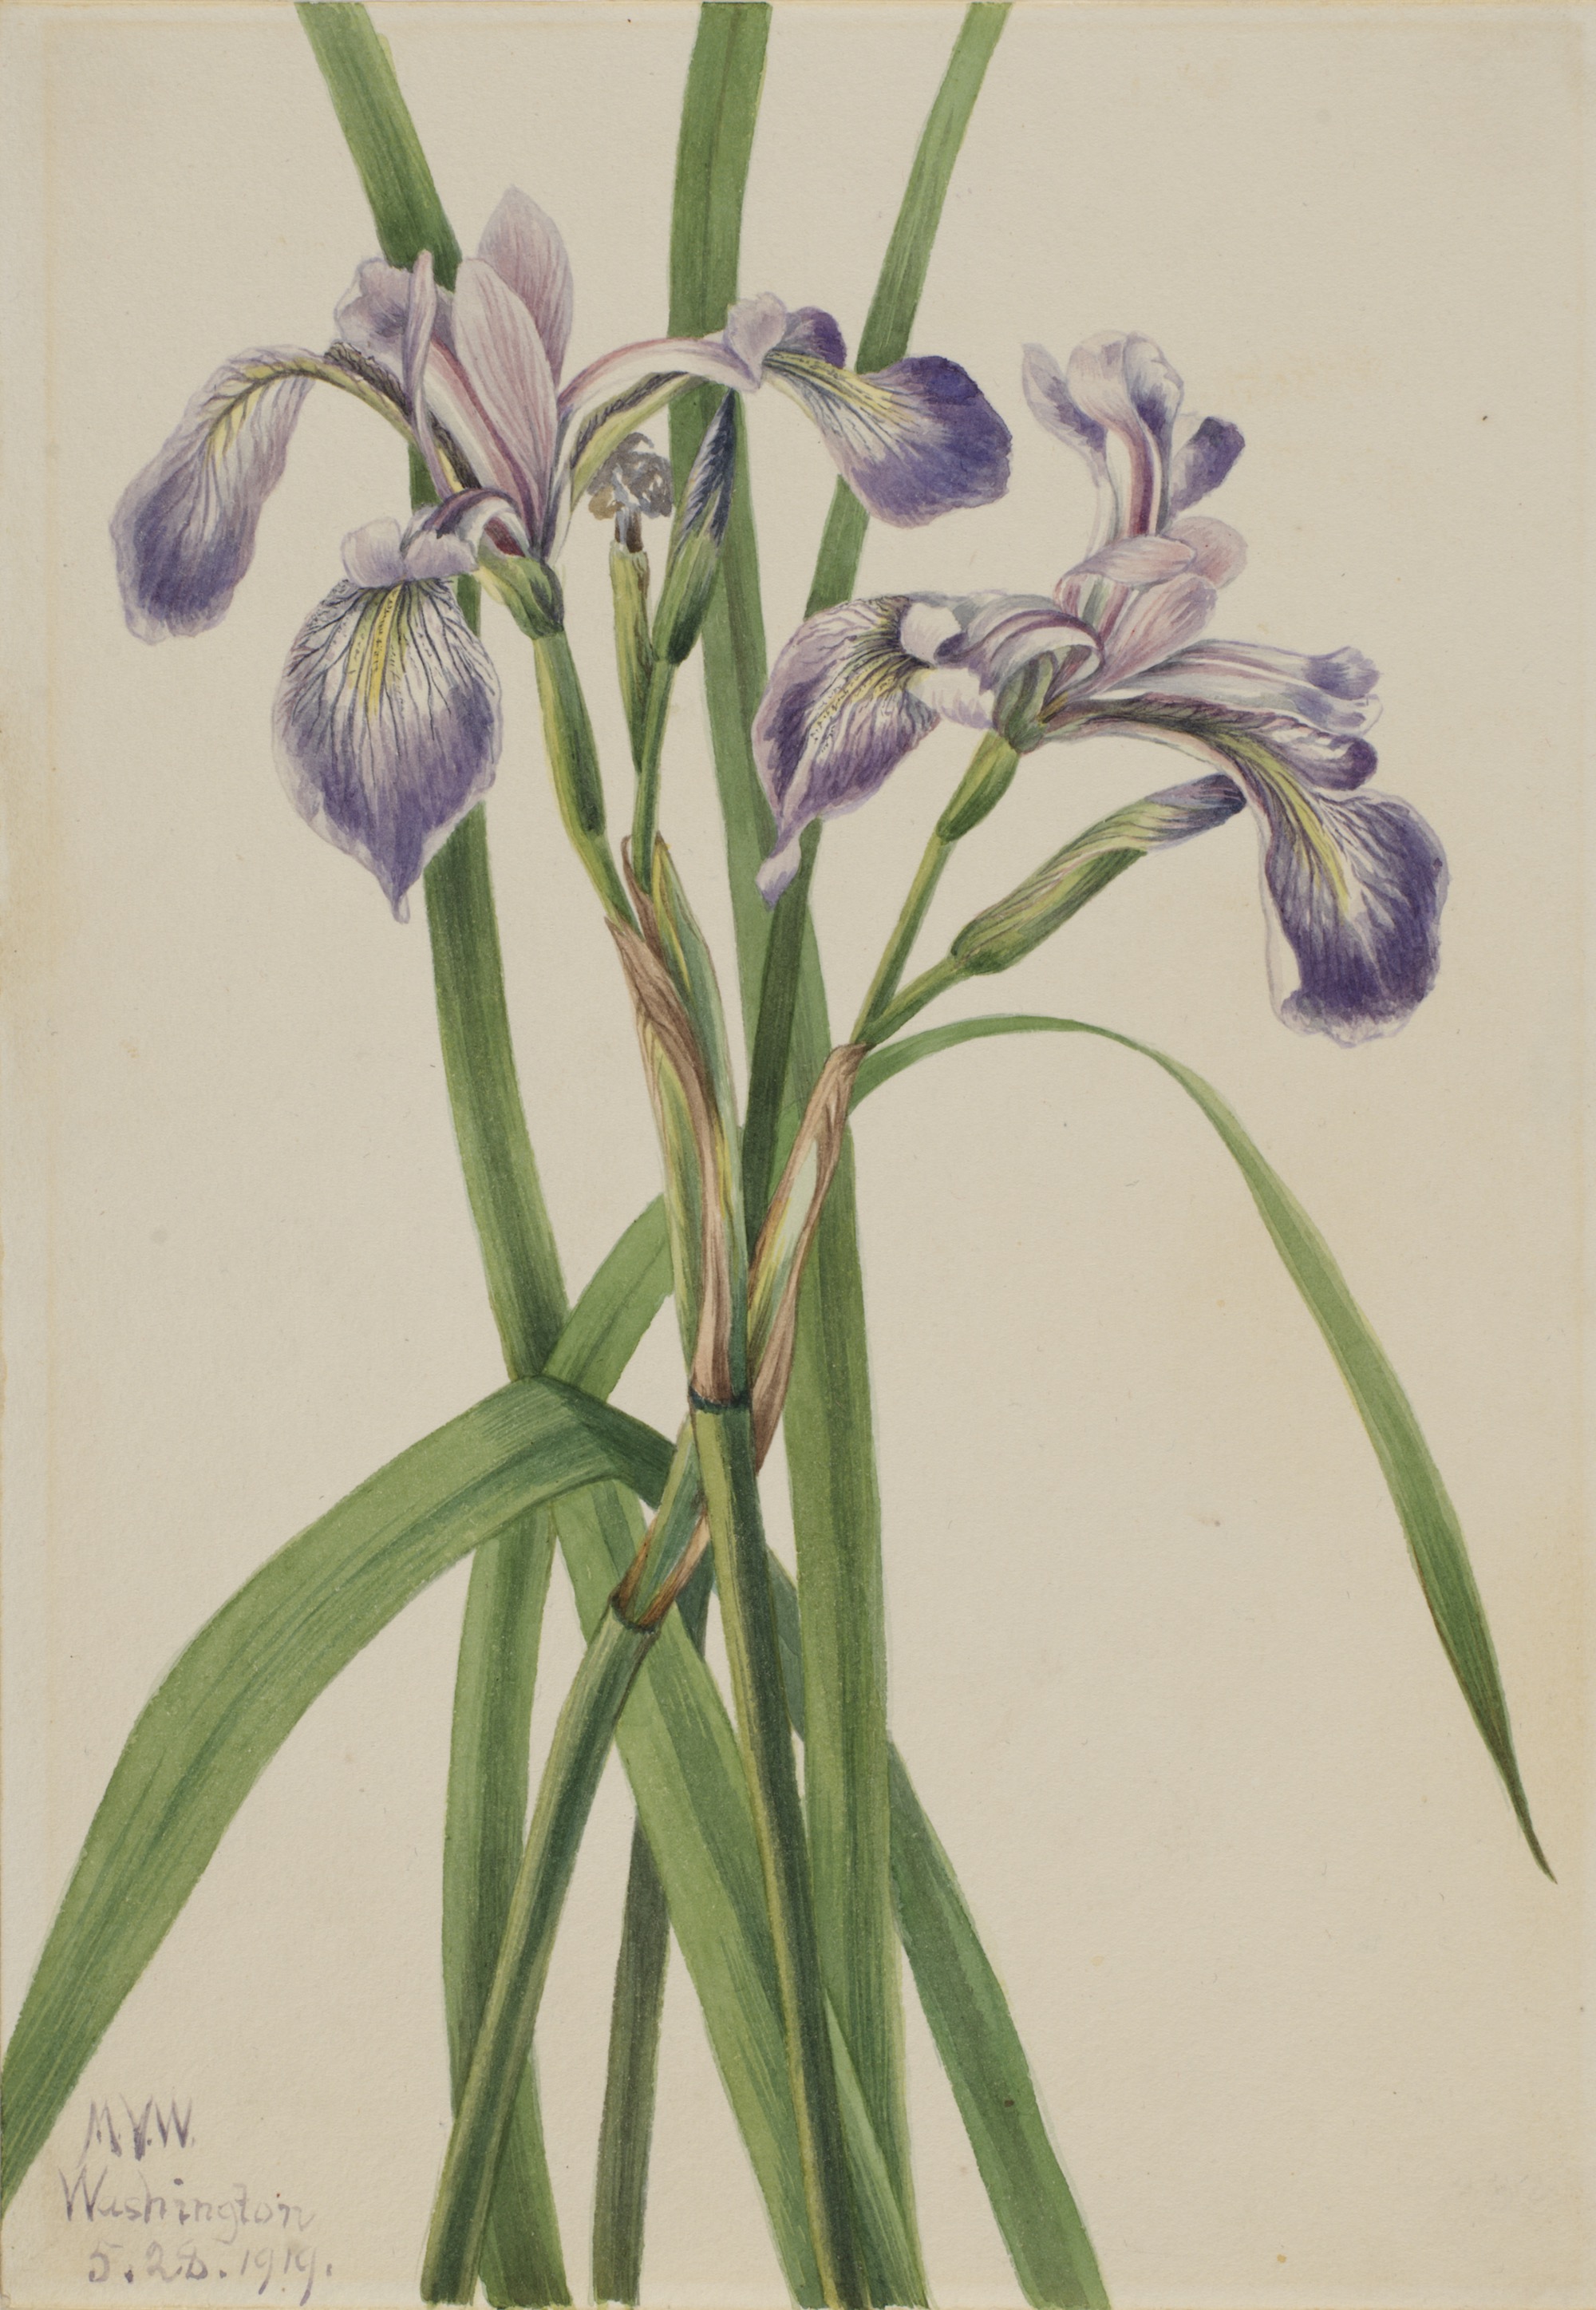 1919 Blue flag iris illustration by Mary Vaux Walcott.